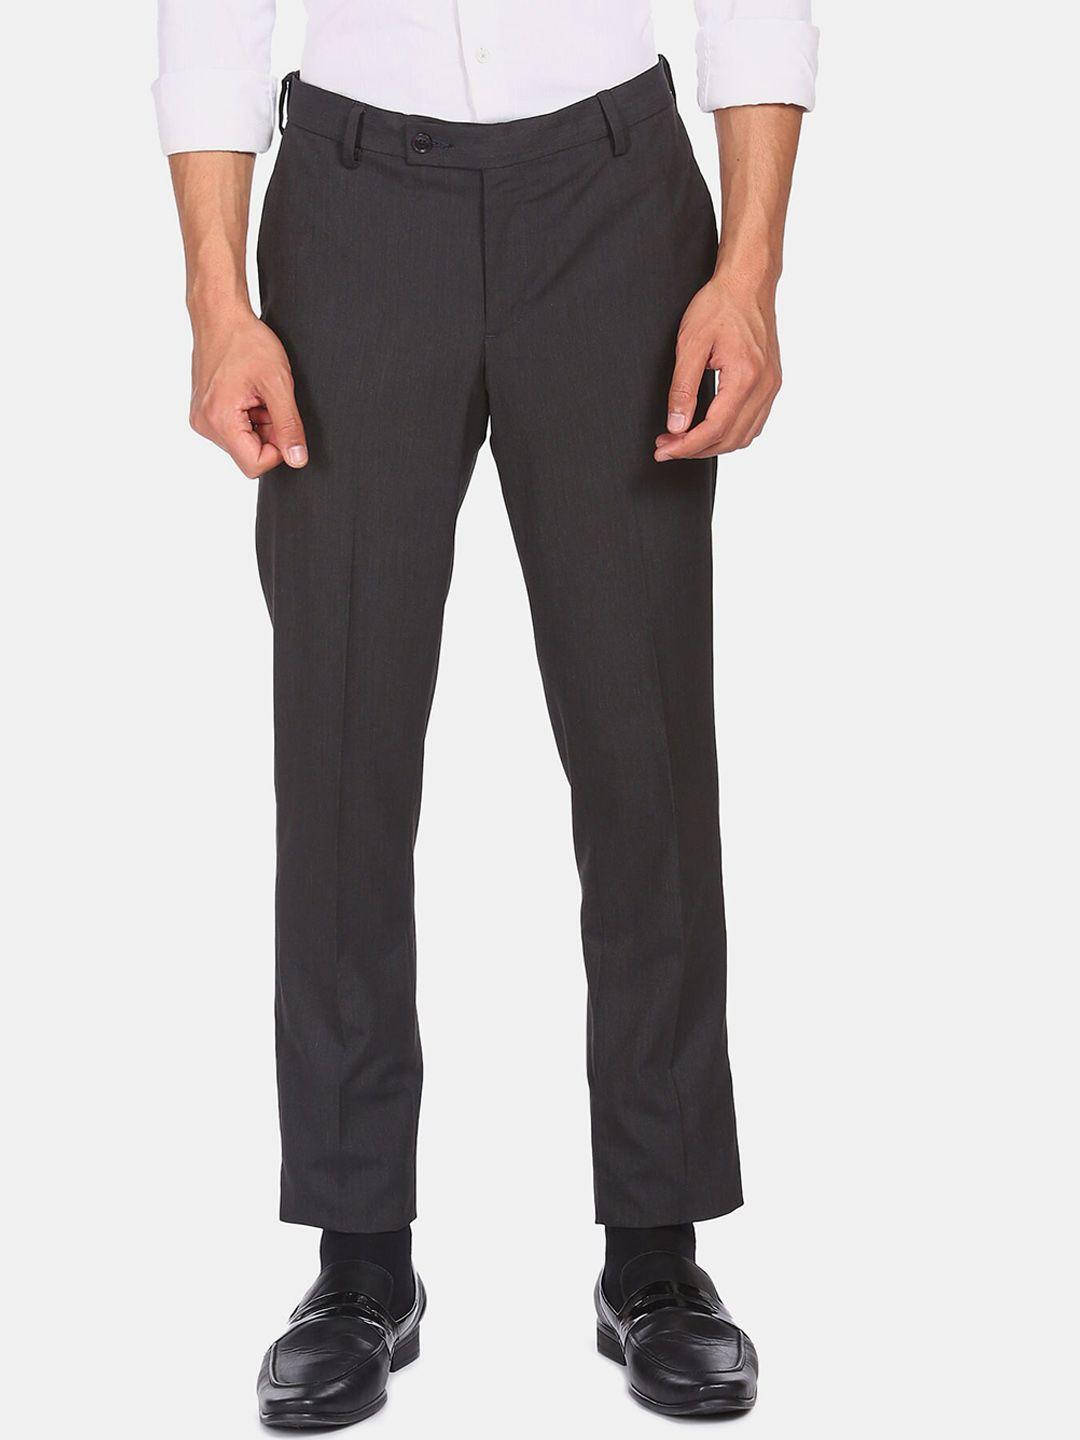 arrow-men-grey-flat-front-solid-formal-trousers